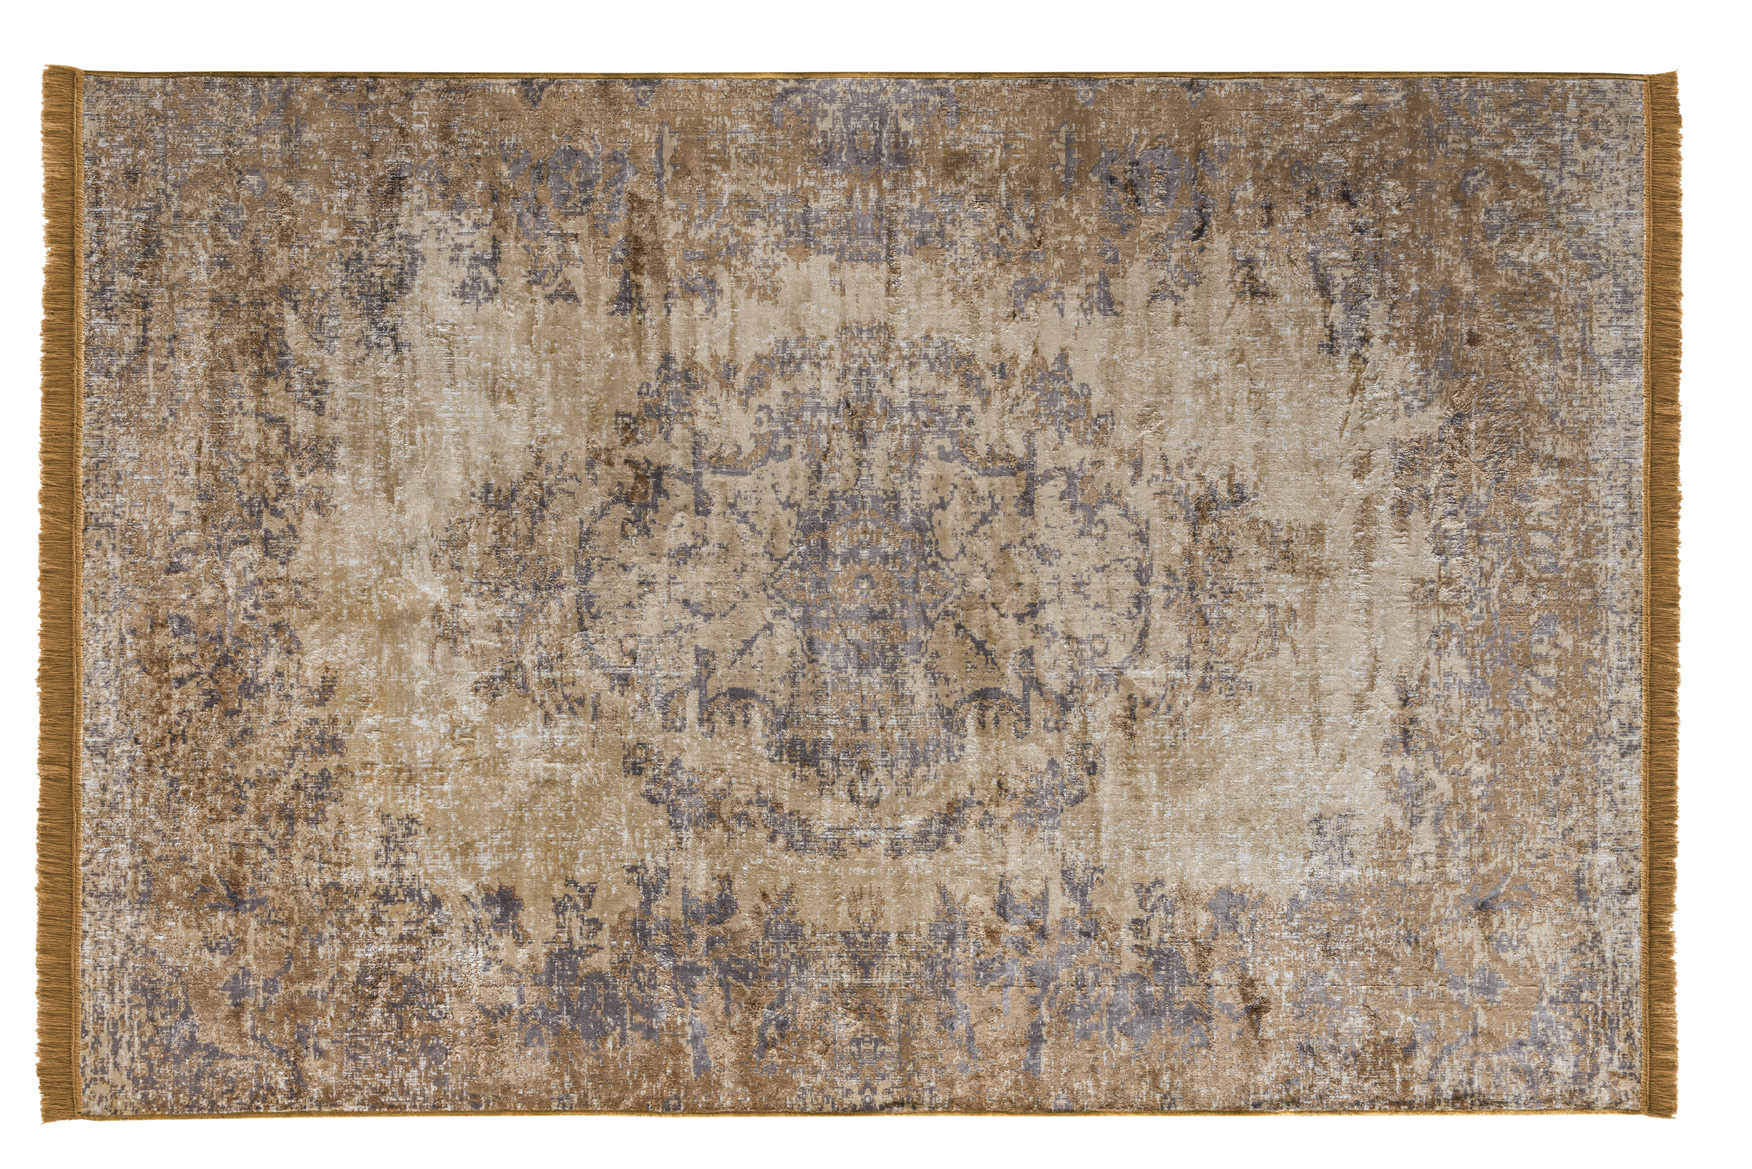 Vintage-Teppich VAN DYCK, 200 x 300 cm | gelb | traditionelle Ornamente | Used-Look